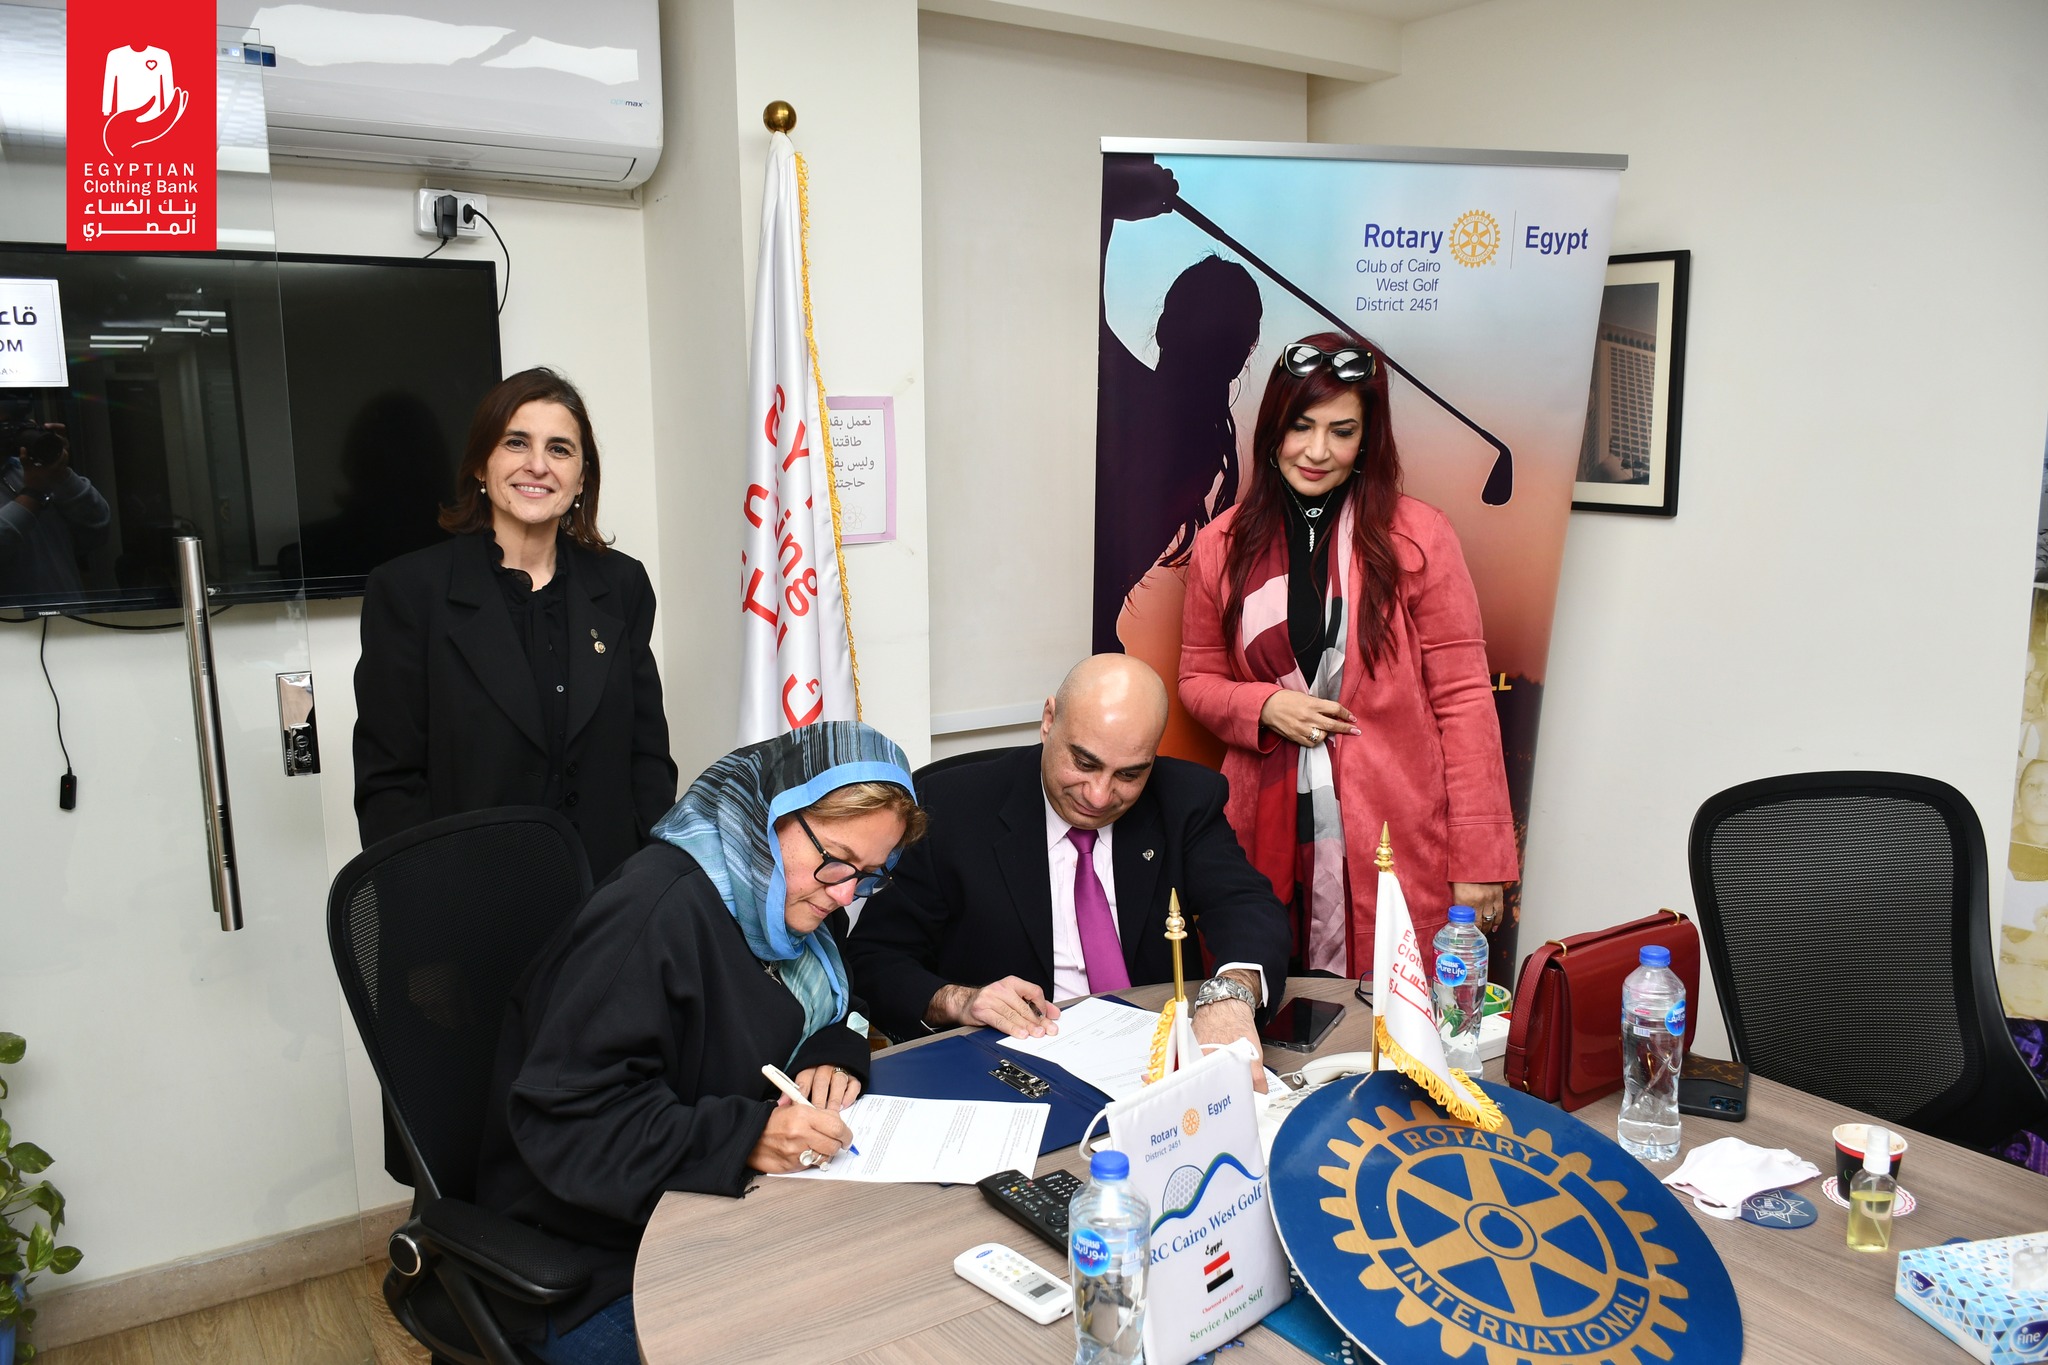 Rotary Club of Cairo West Golf توقيع بروتوكول تعاون مع